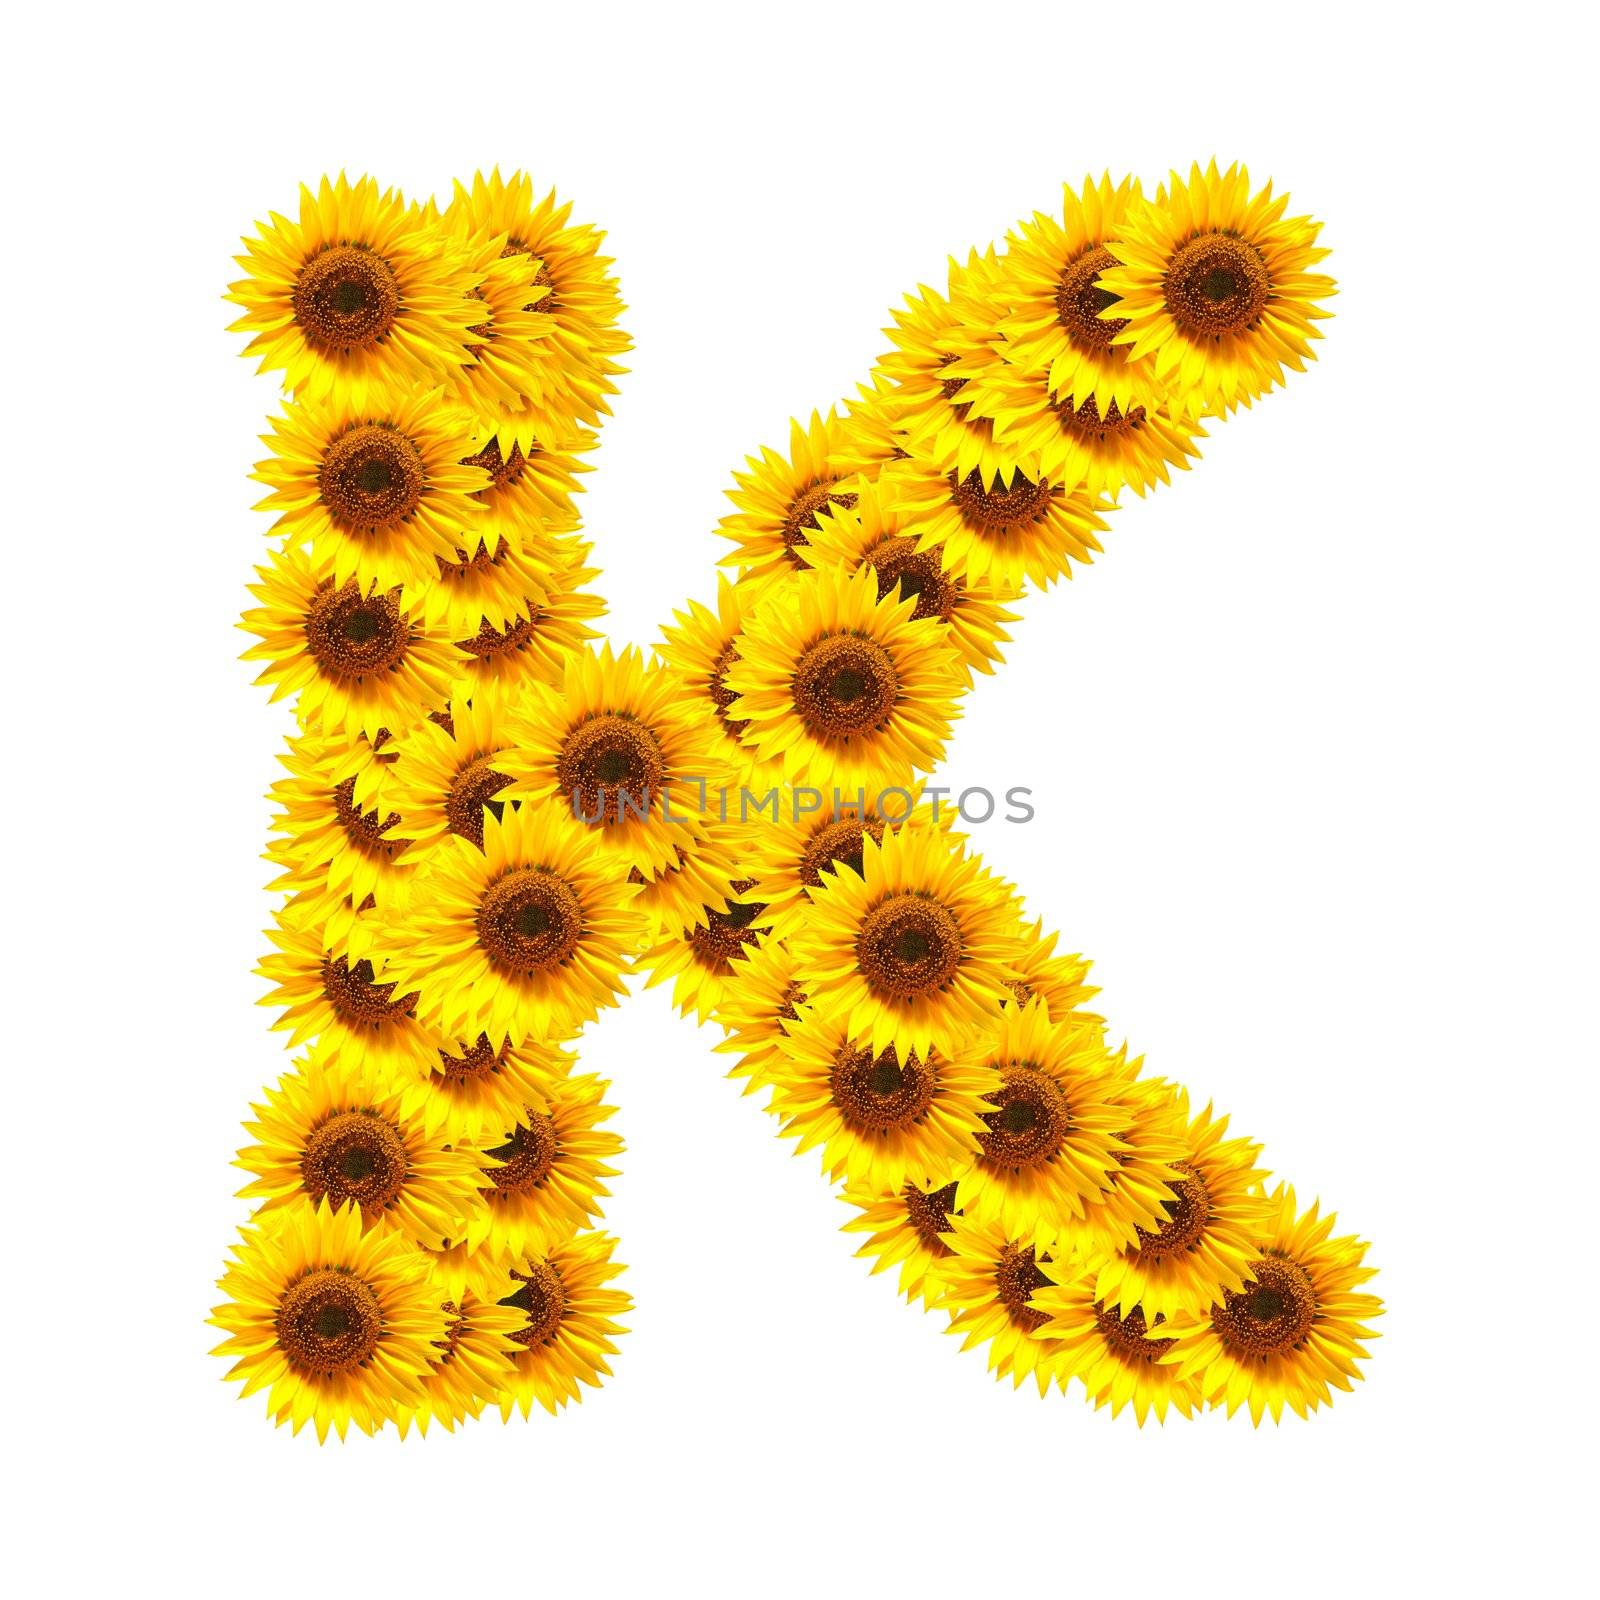 alphabet of flowers by gunnar3000